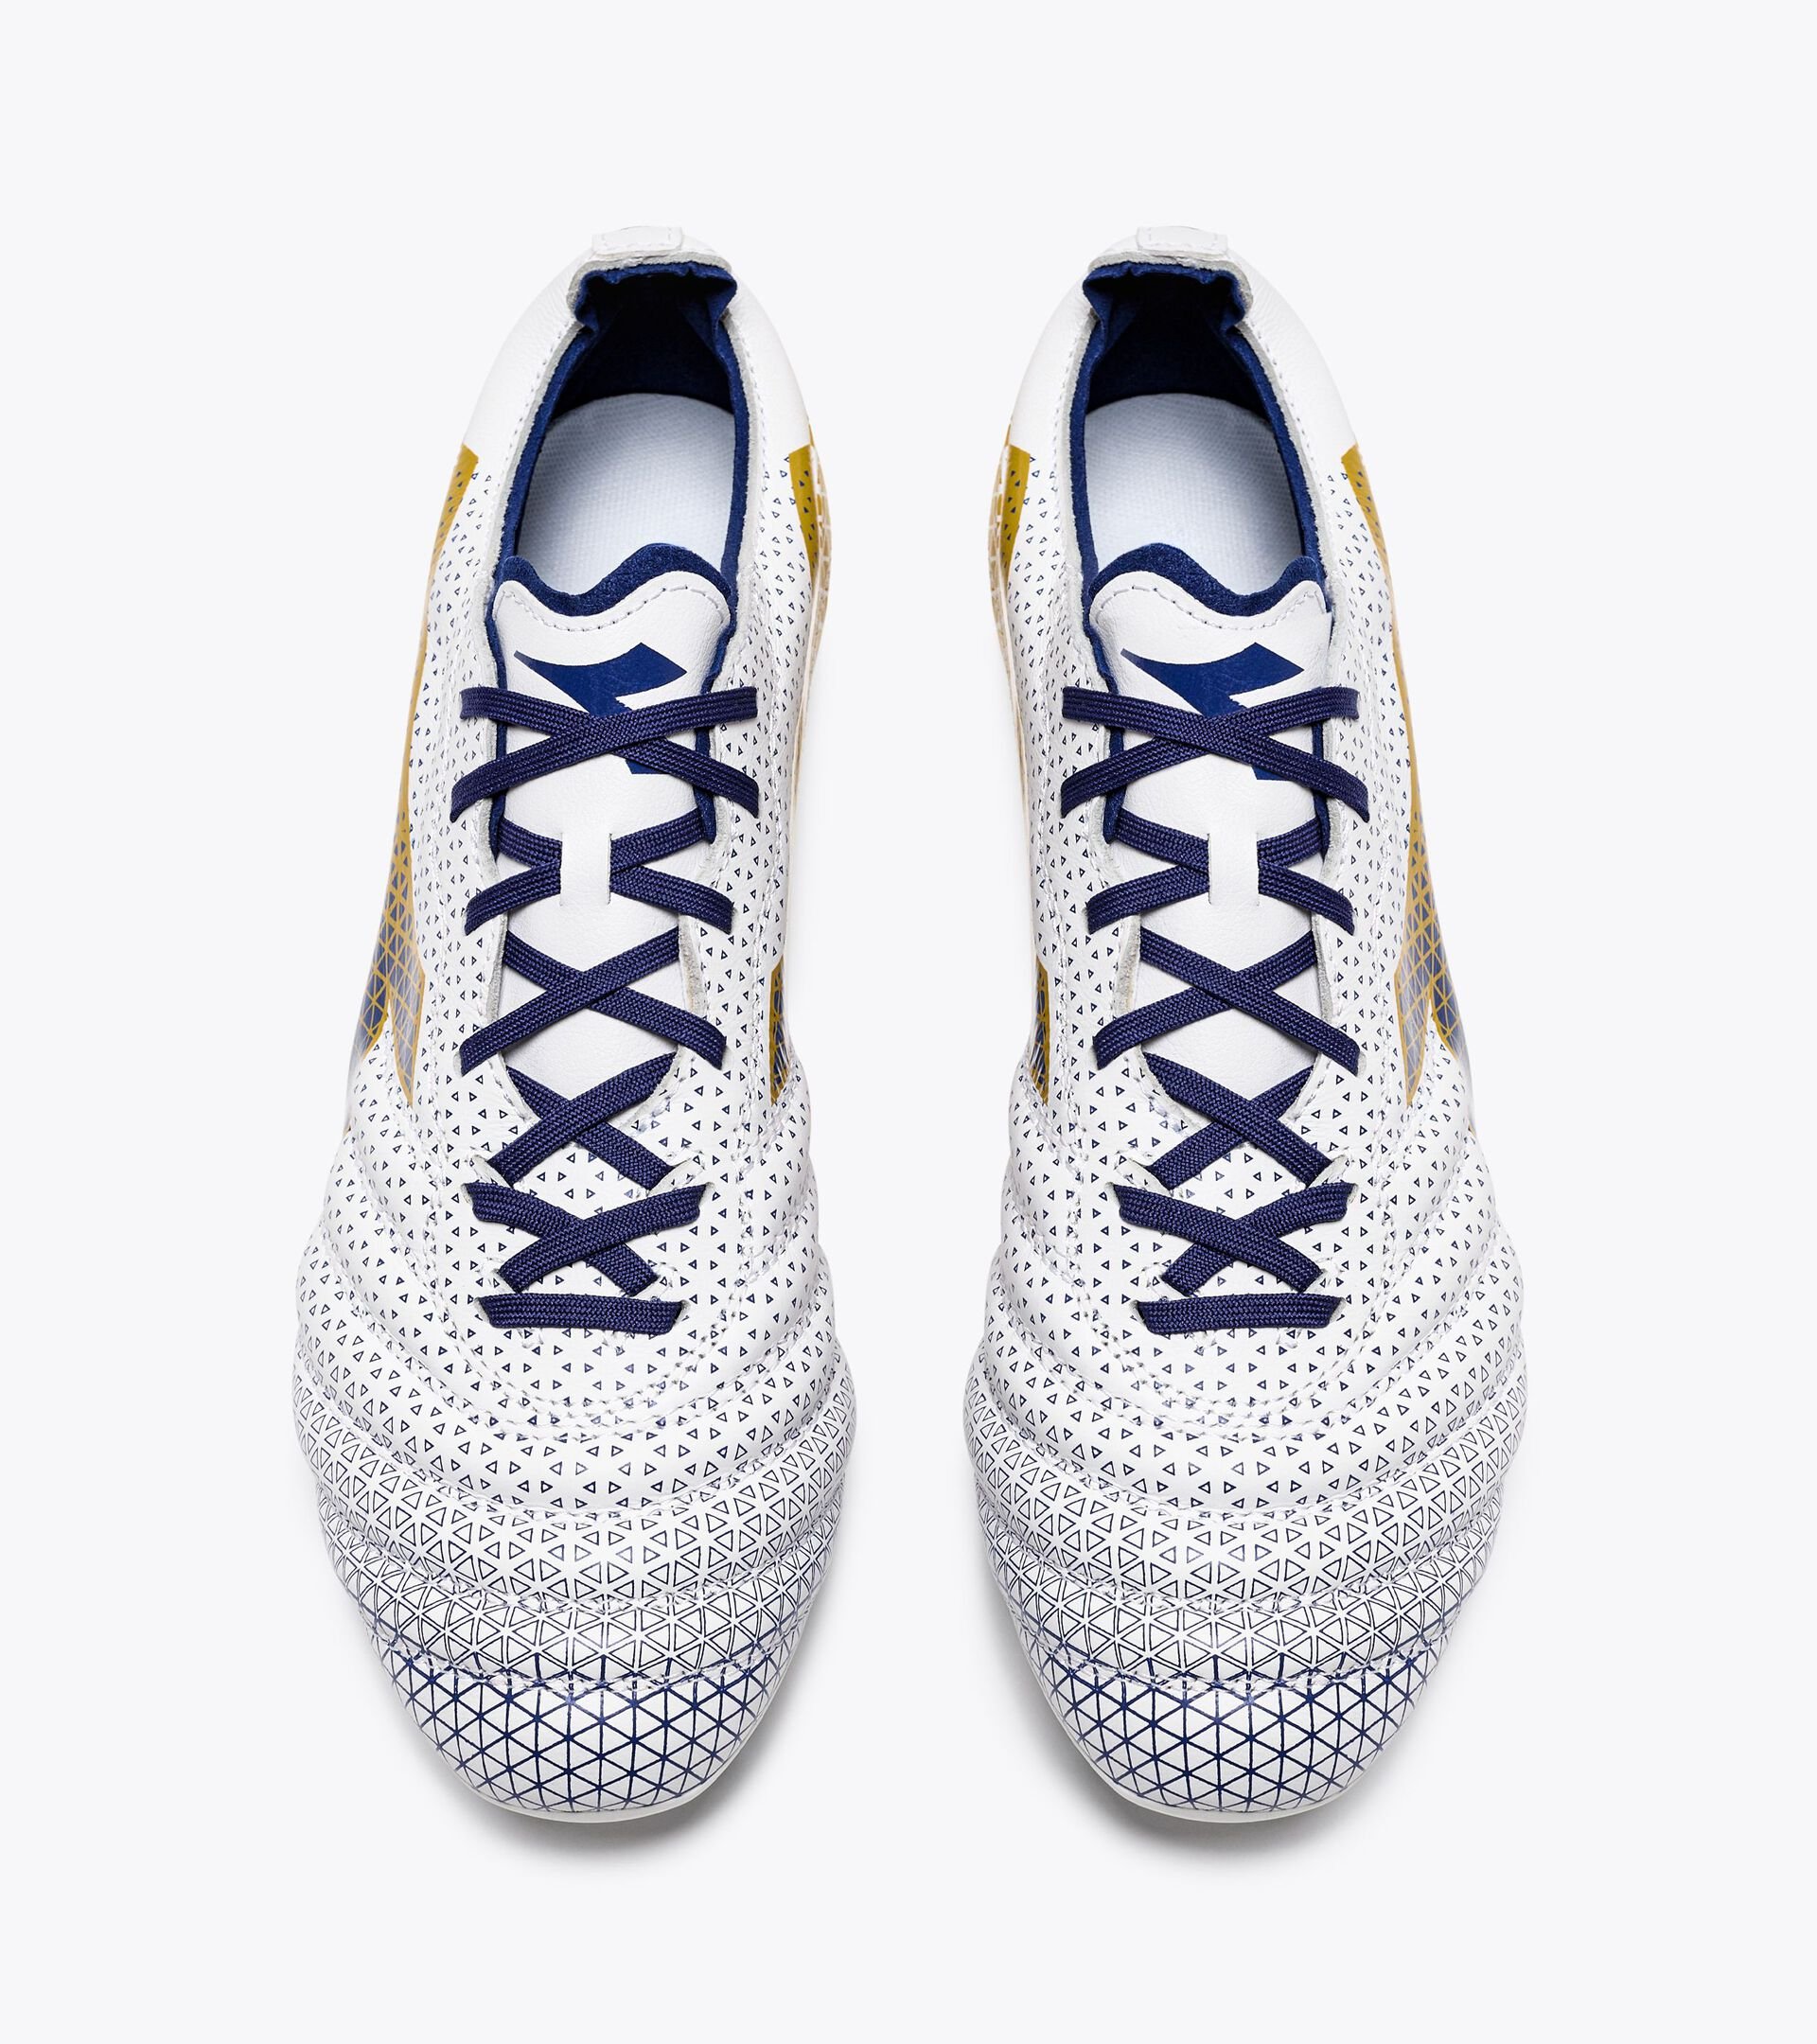 Calcio boots for firm grounds - Men BRASIL ELITE GR LT LP12 WHITE/MAZARINE BLUE/GOLD - Diadora